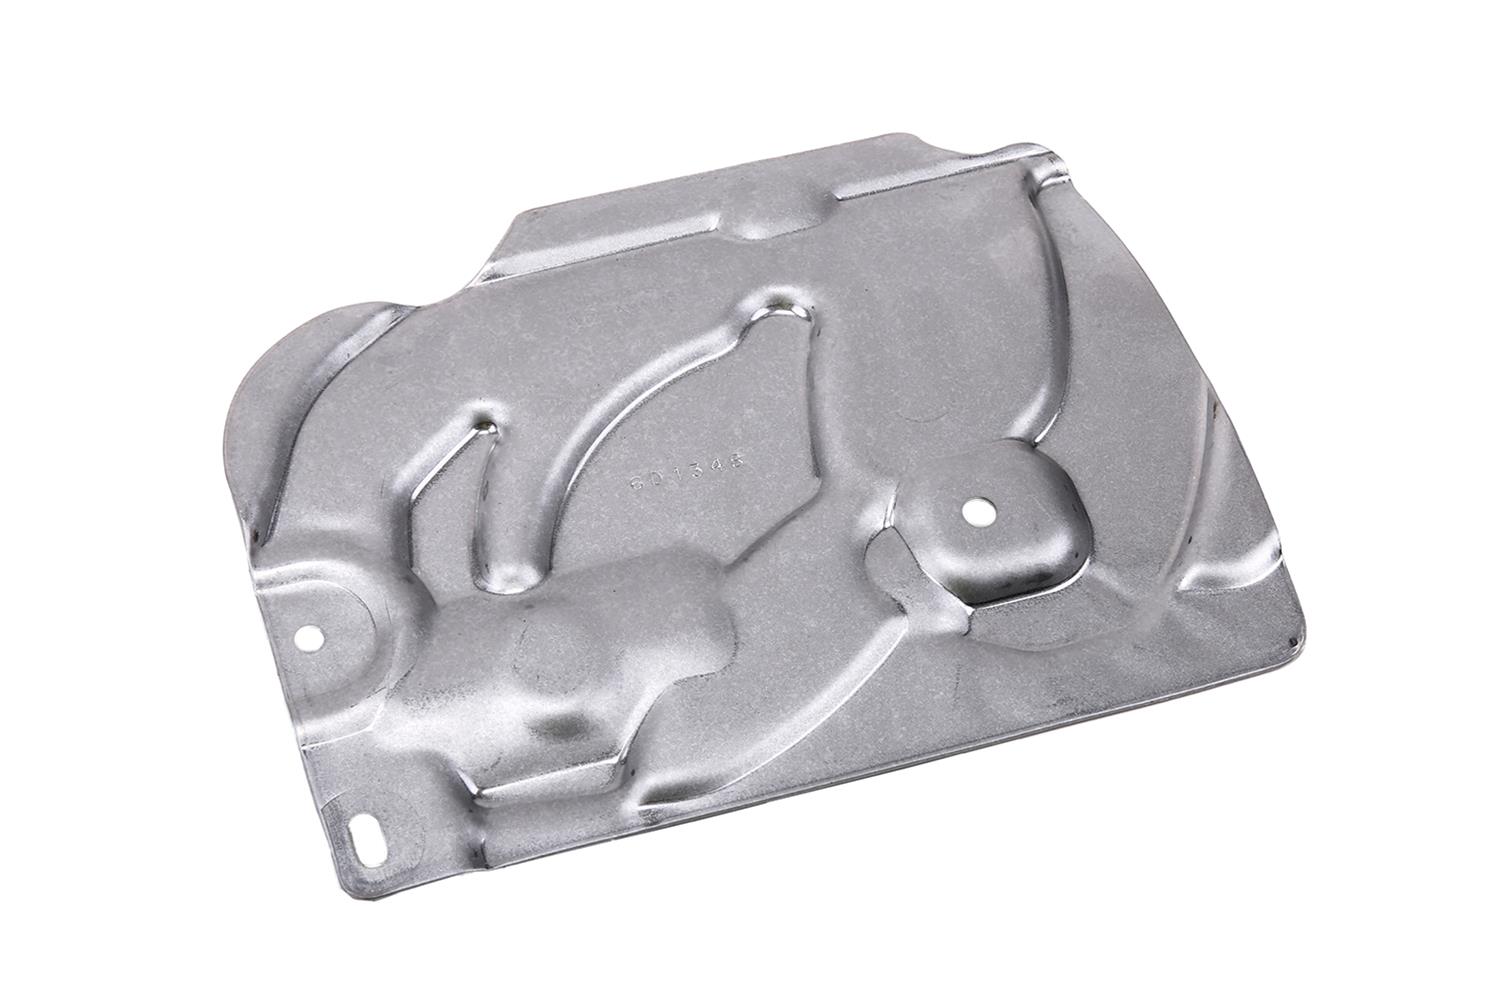 Raw Aluminum Heat Shield For Chevy Starter 